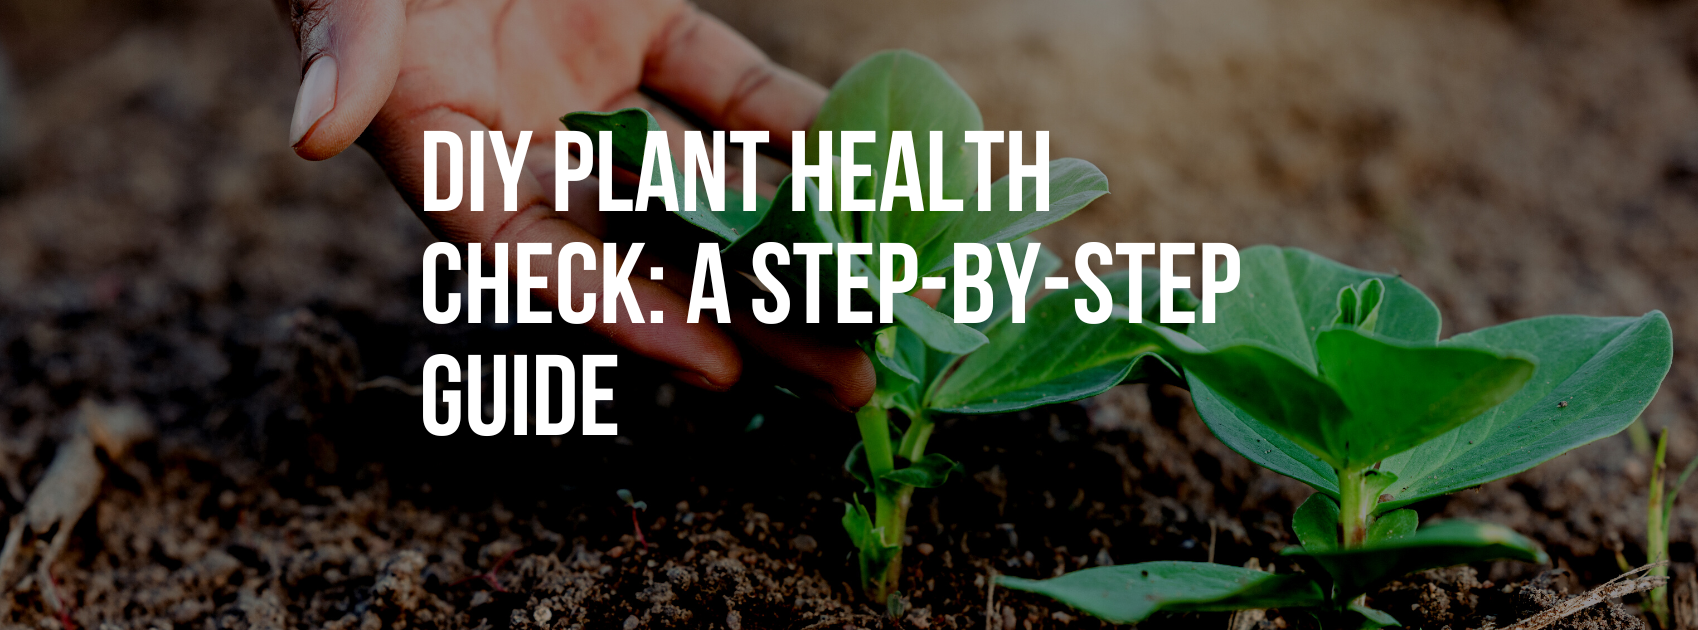 DIY Plant Health Check: A Step-by-Step Guide